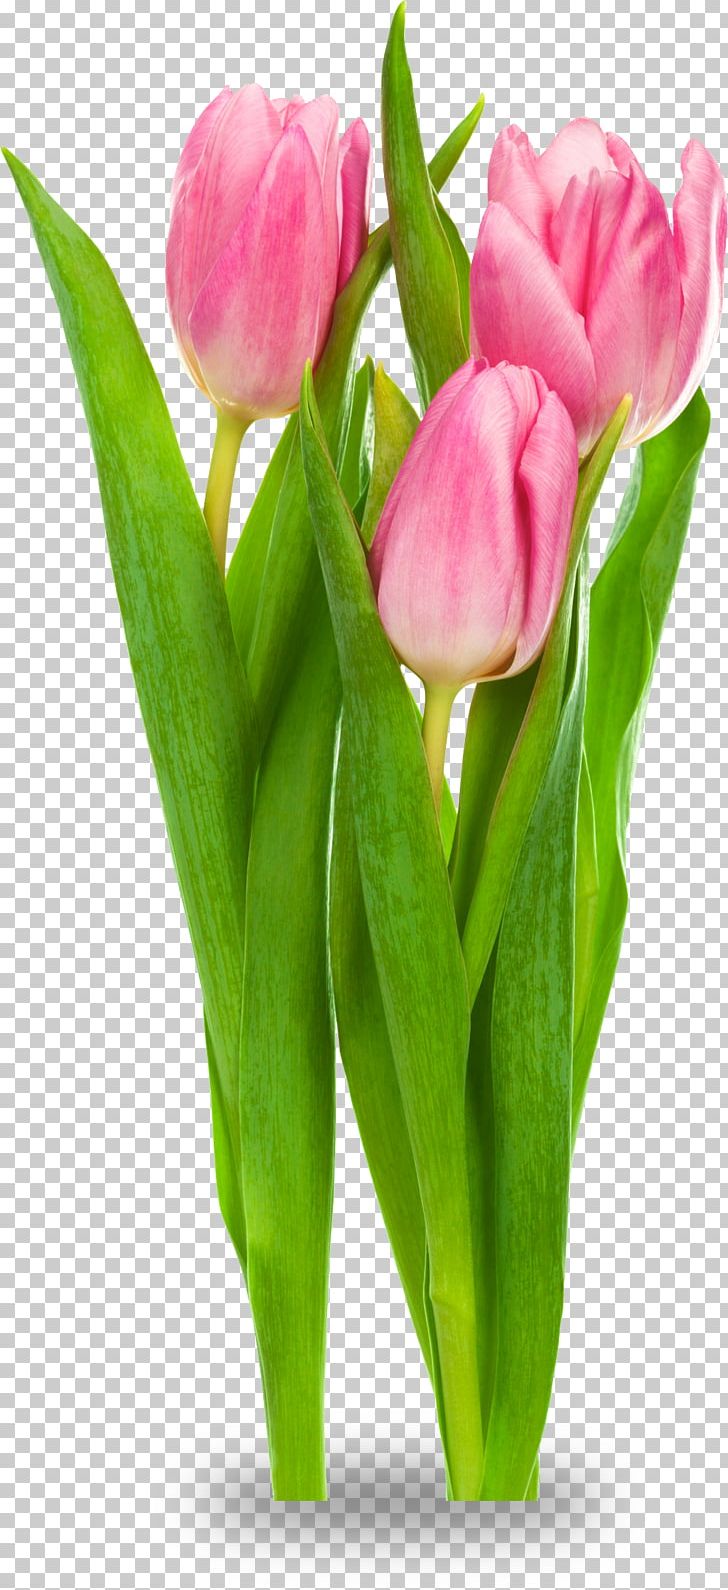 Indira Gandhi Memorial Tulip Garden Tulipa Gesneriana Flower PNG, Clipart, Bud, Cut Flowers, Desktop Wallpaper, Floral Design, Floristry Free PNG Download